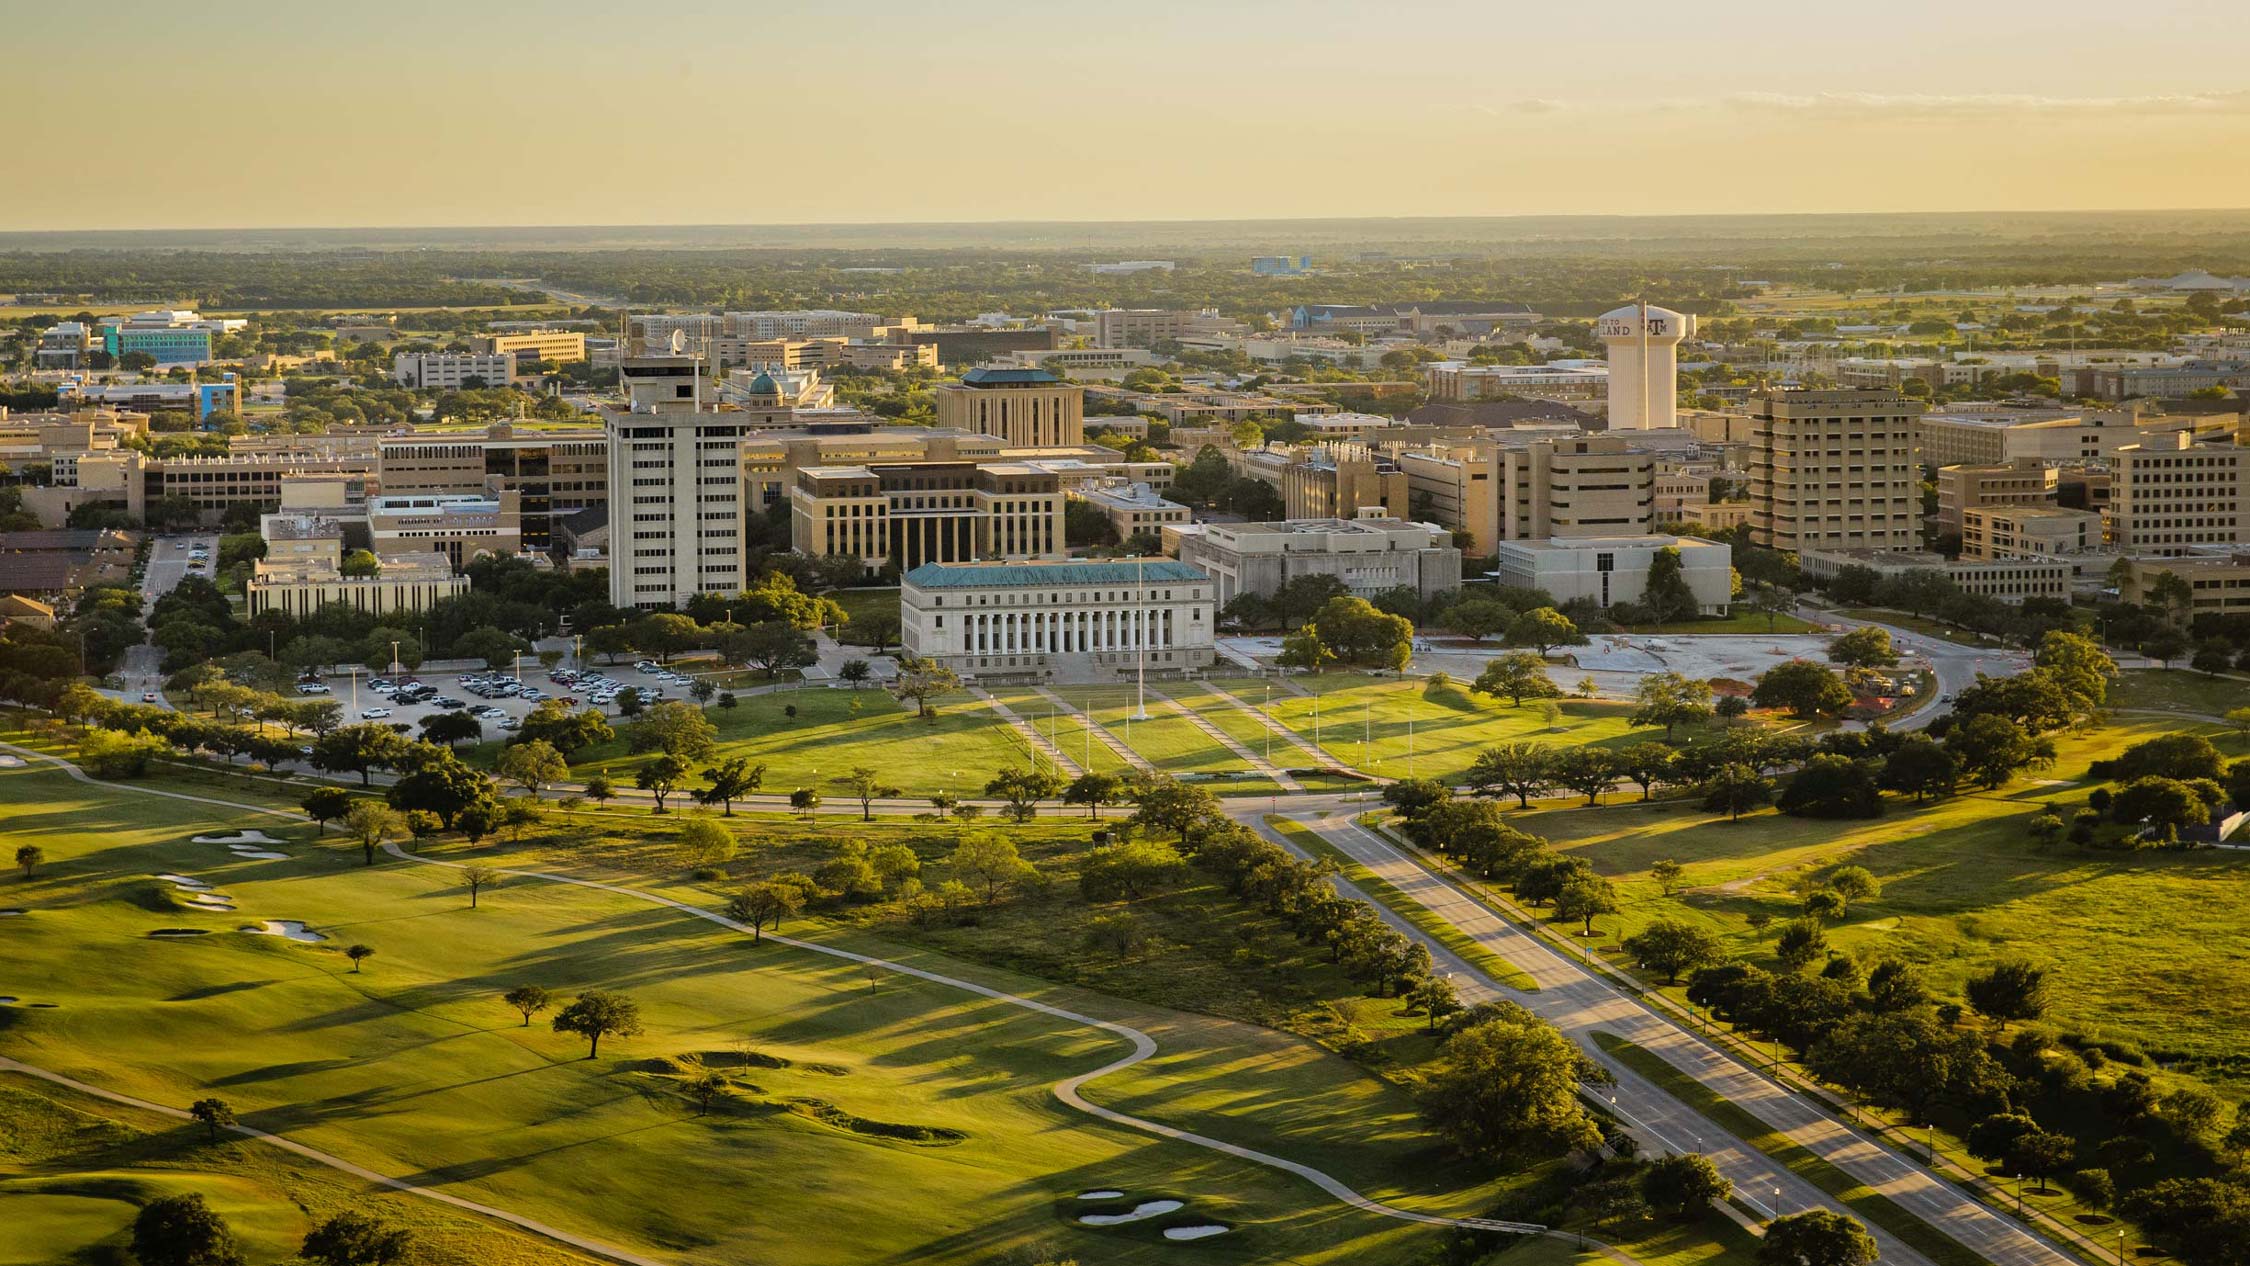 An aerial view of Texas A&M campus